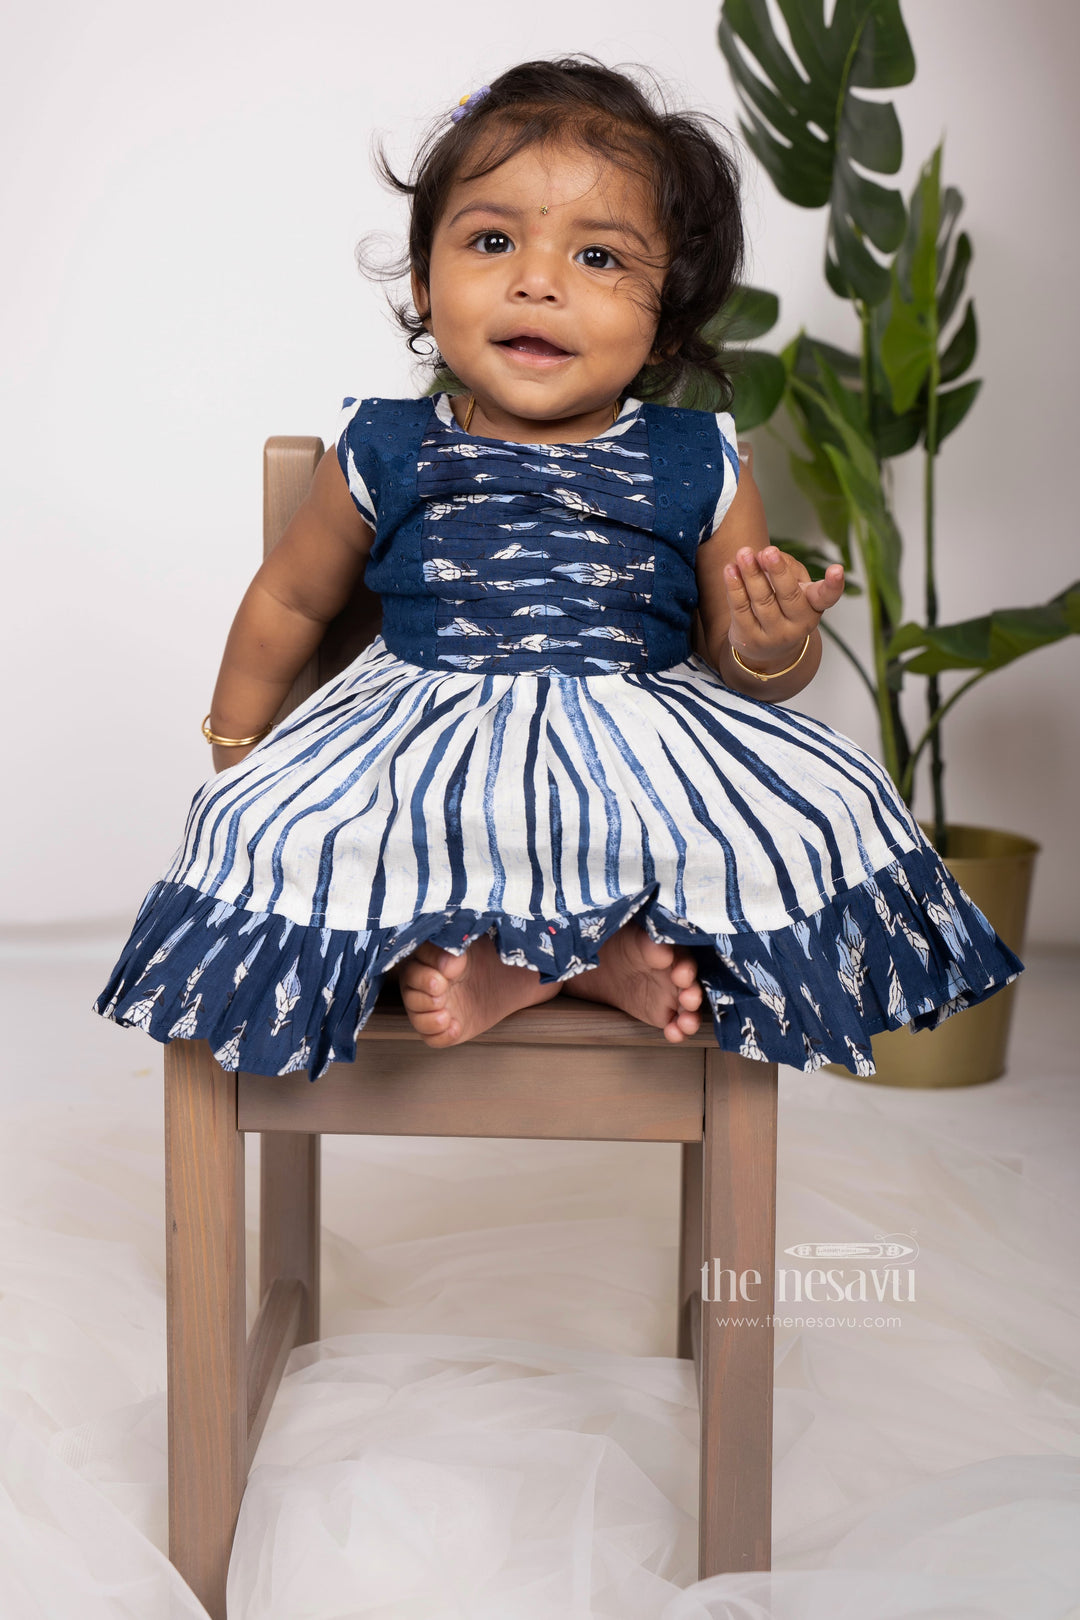 The Nesavu Baby Frock / Jhabla Navy Blue Pin-Tucked Pleated Designer Ruffle Ended Cotton Gown For Baby Girls psr silks Nesavu 14 (6M) / navyblue BFJ315